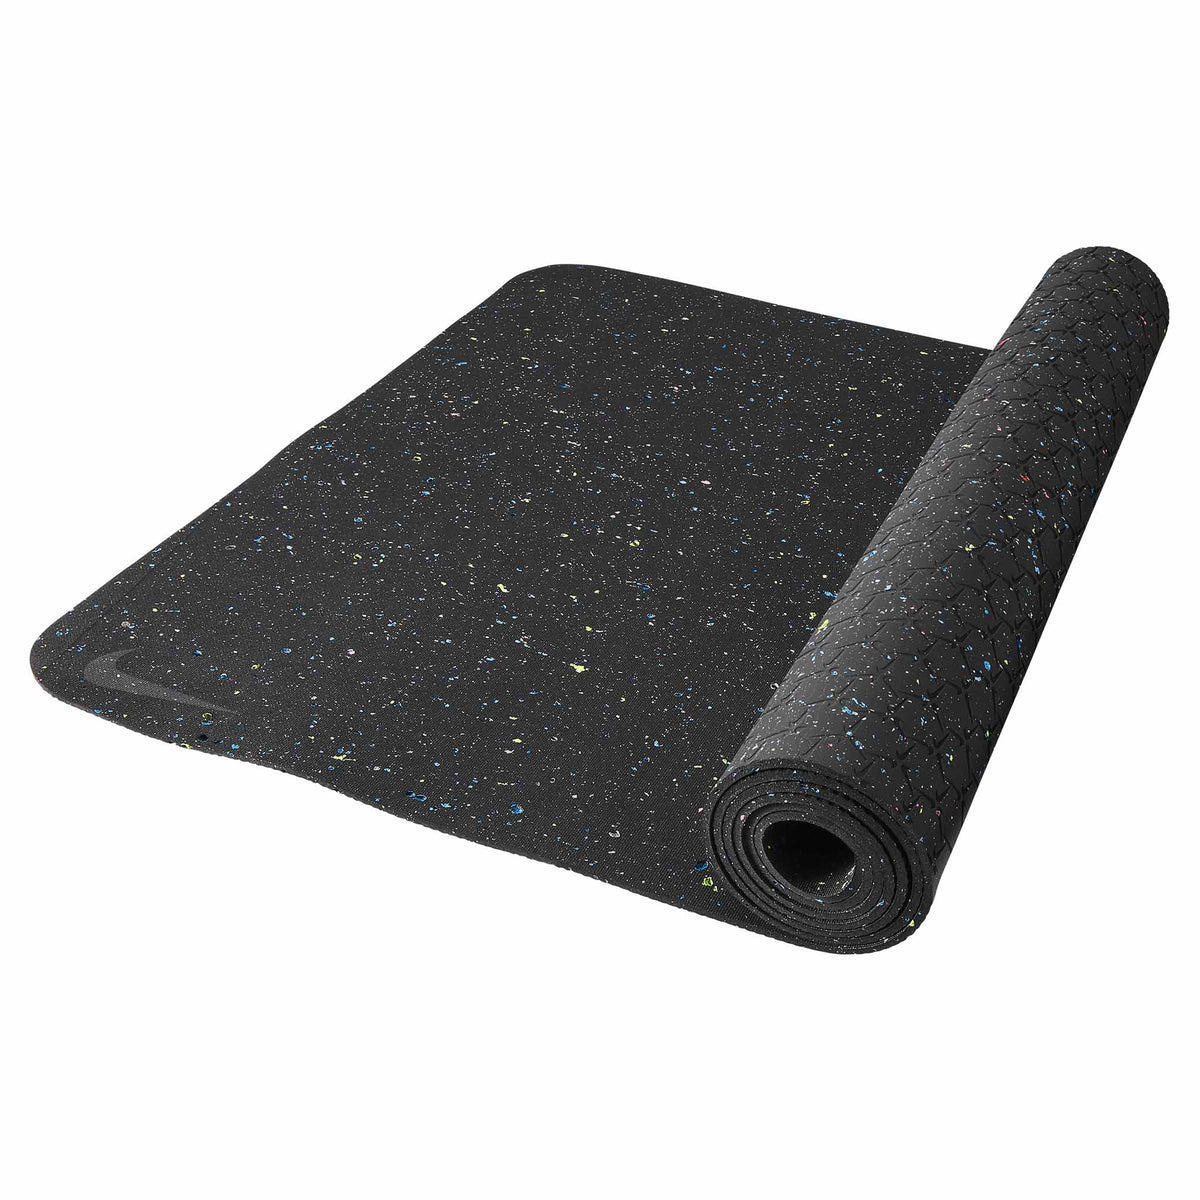 Nike Flow Yoga Mat 4mm tapis de yoga - Black / Anthracite